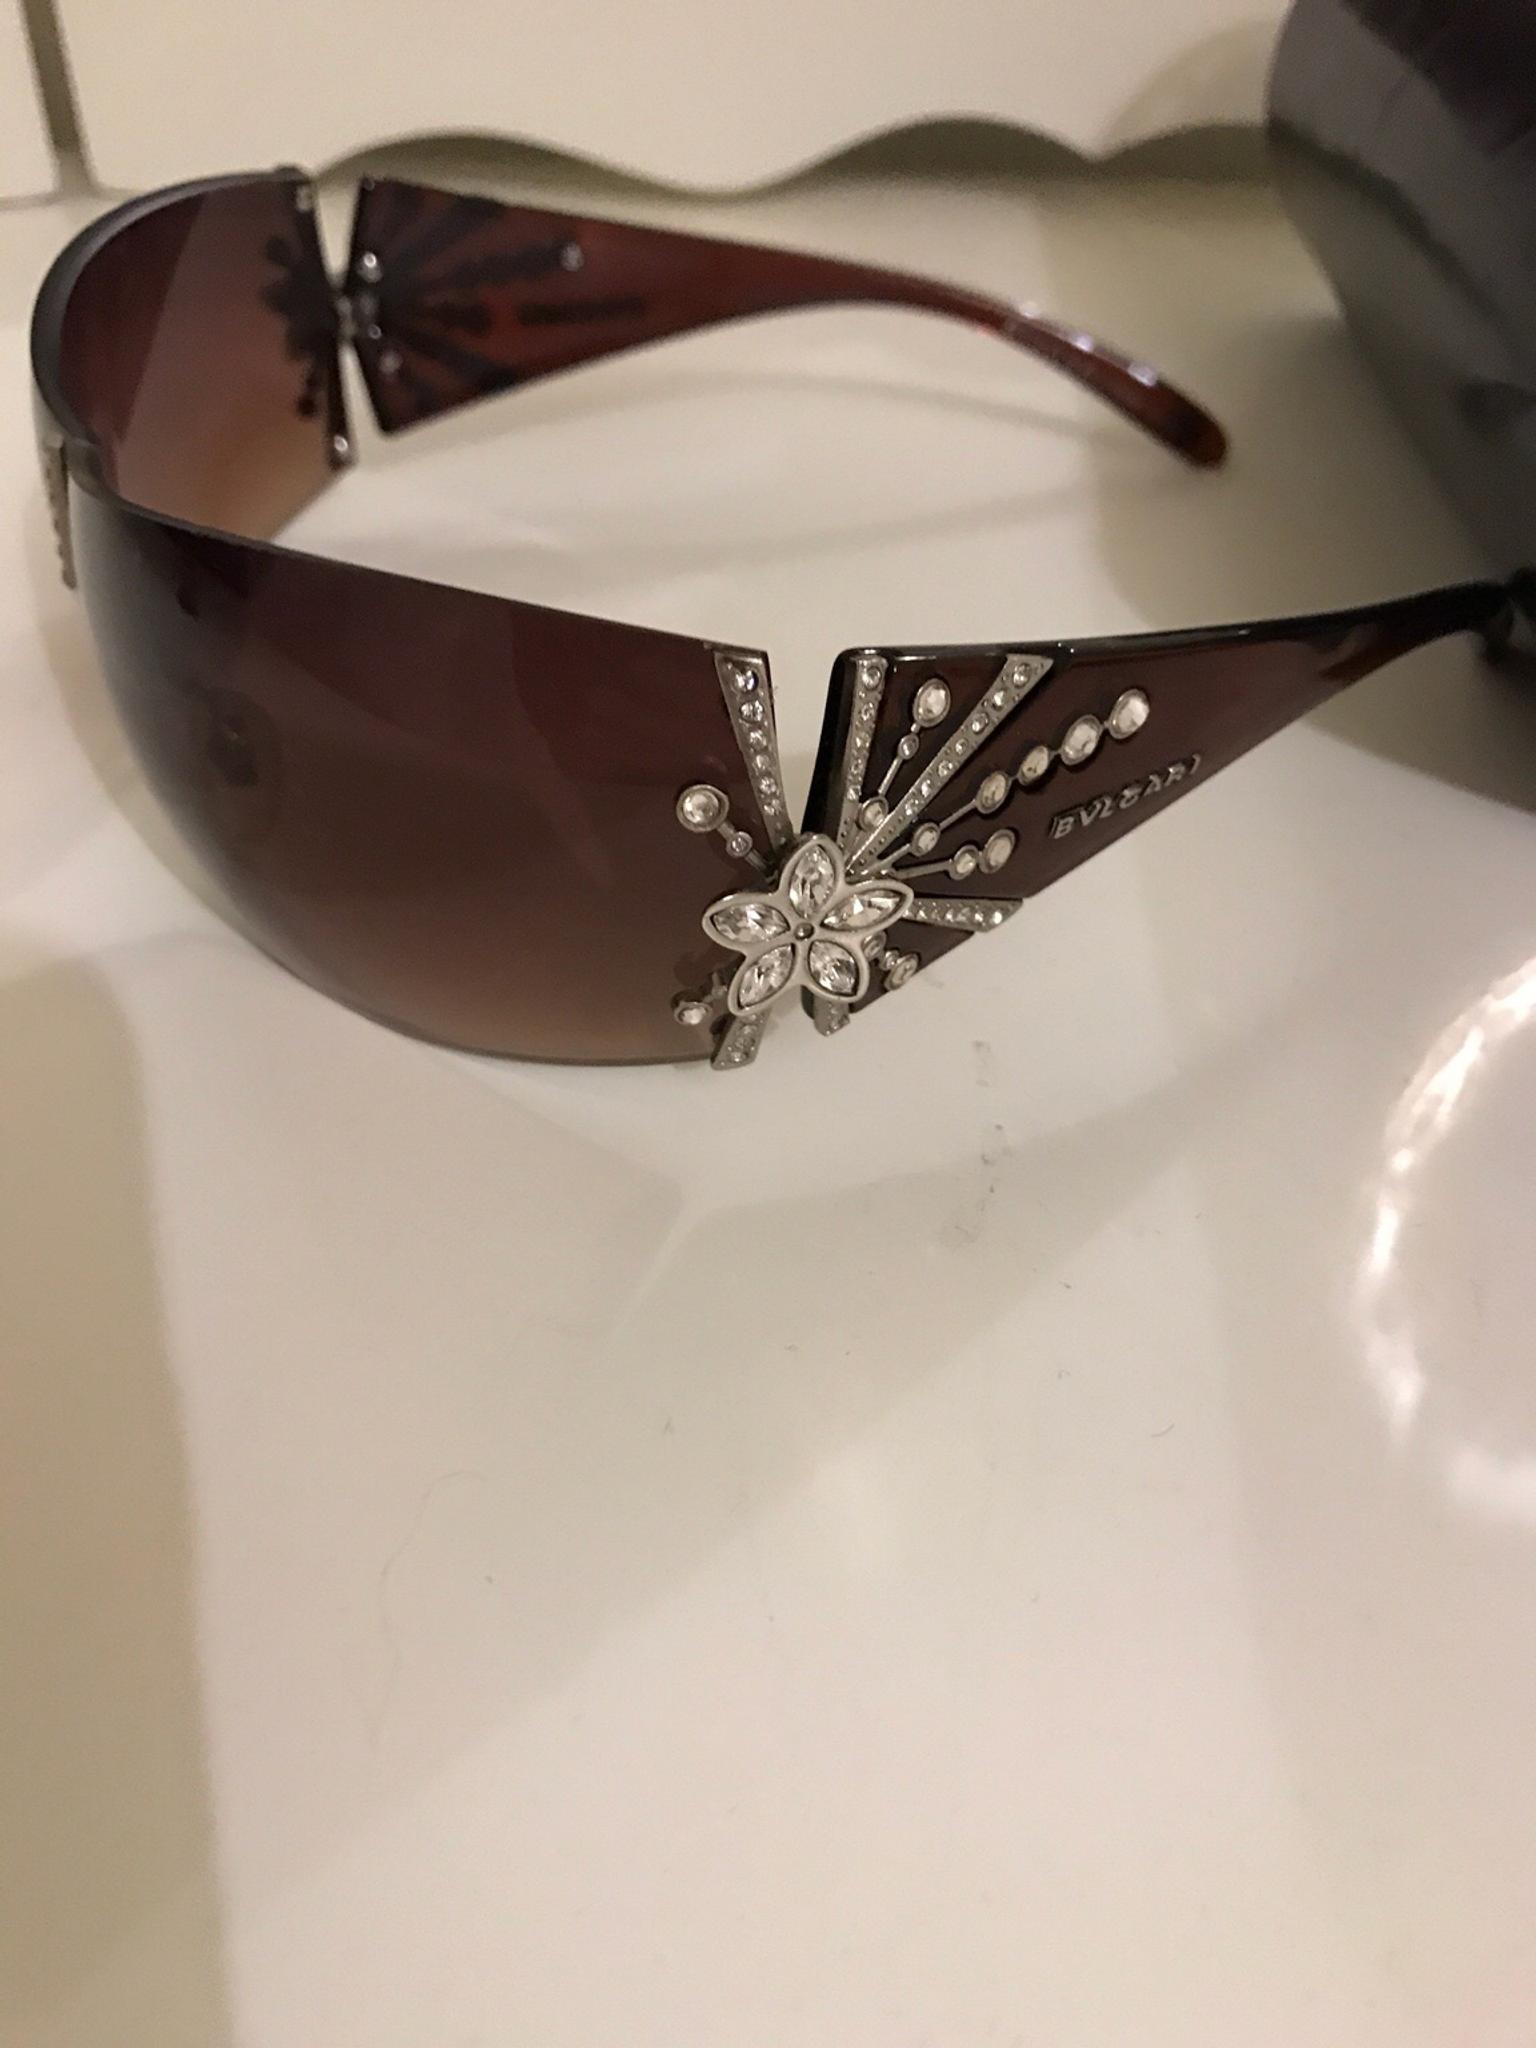 bvlgari limited edition sunglasses